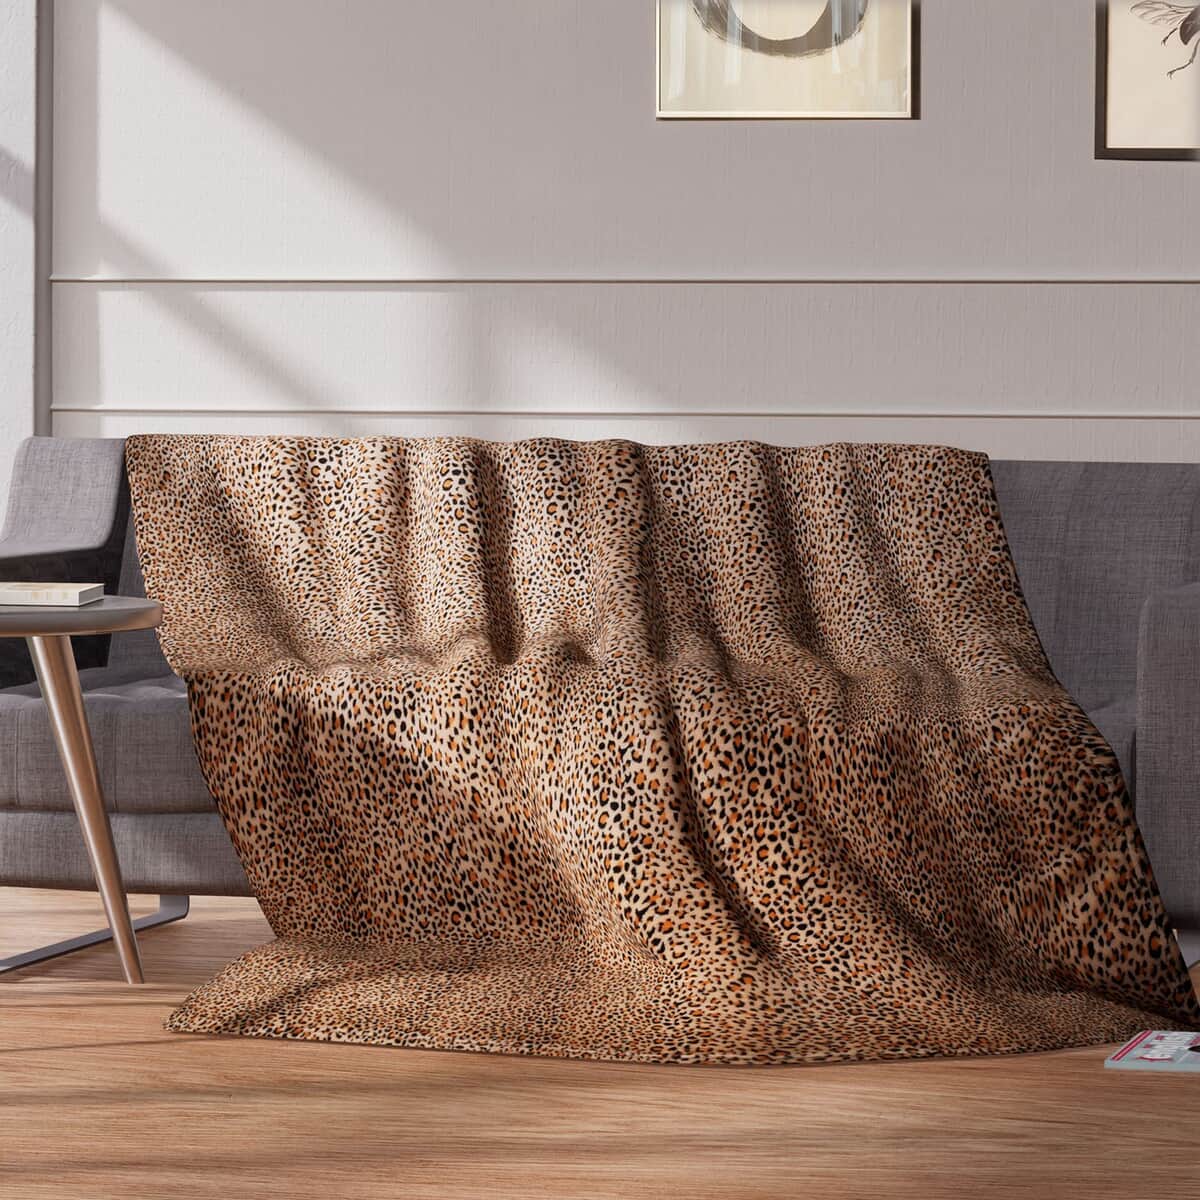 Homesmart Brown Striking Leopard Pattern Microfiber Single Layer Flannel Blanket 100% polyester image number 0